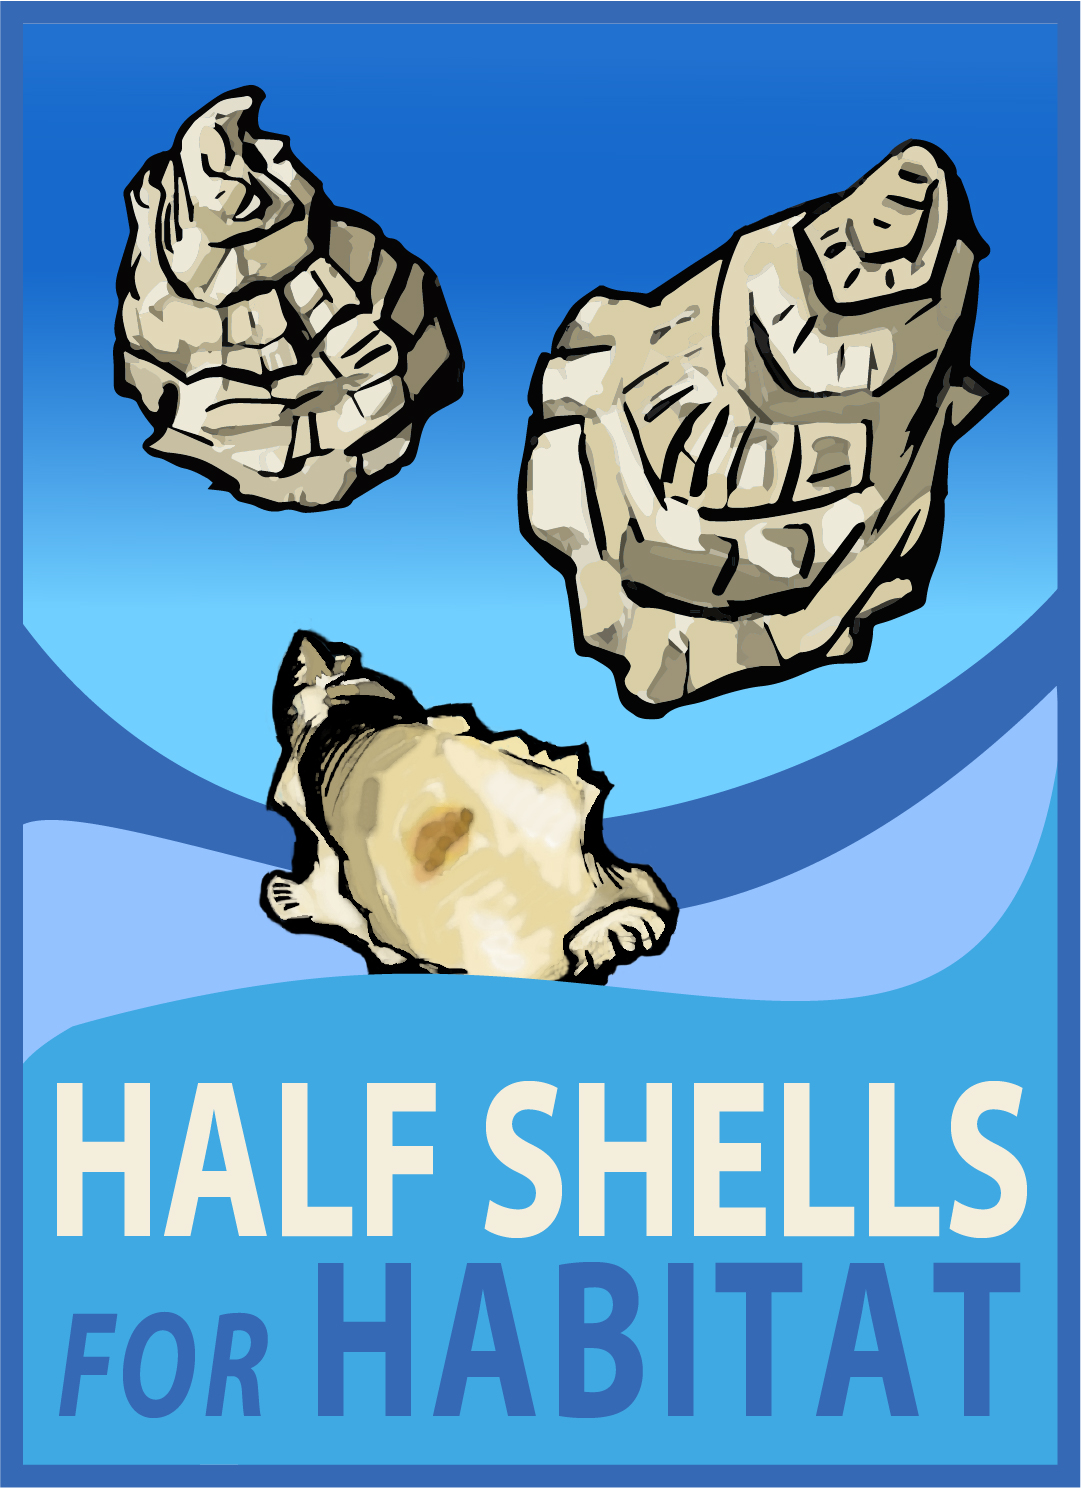 Half Shellsfor Habitat